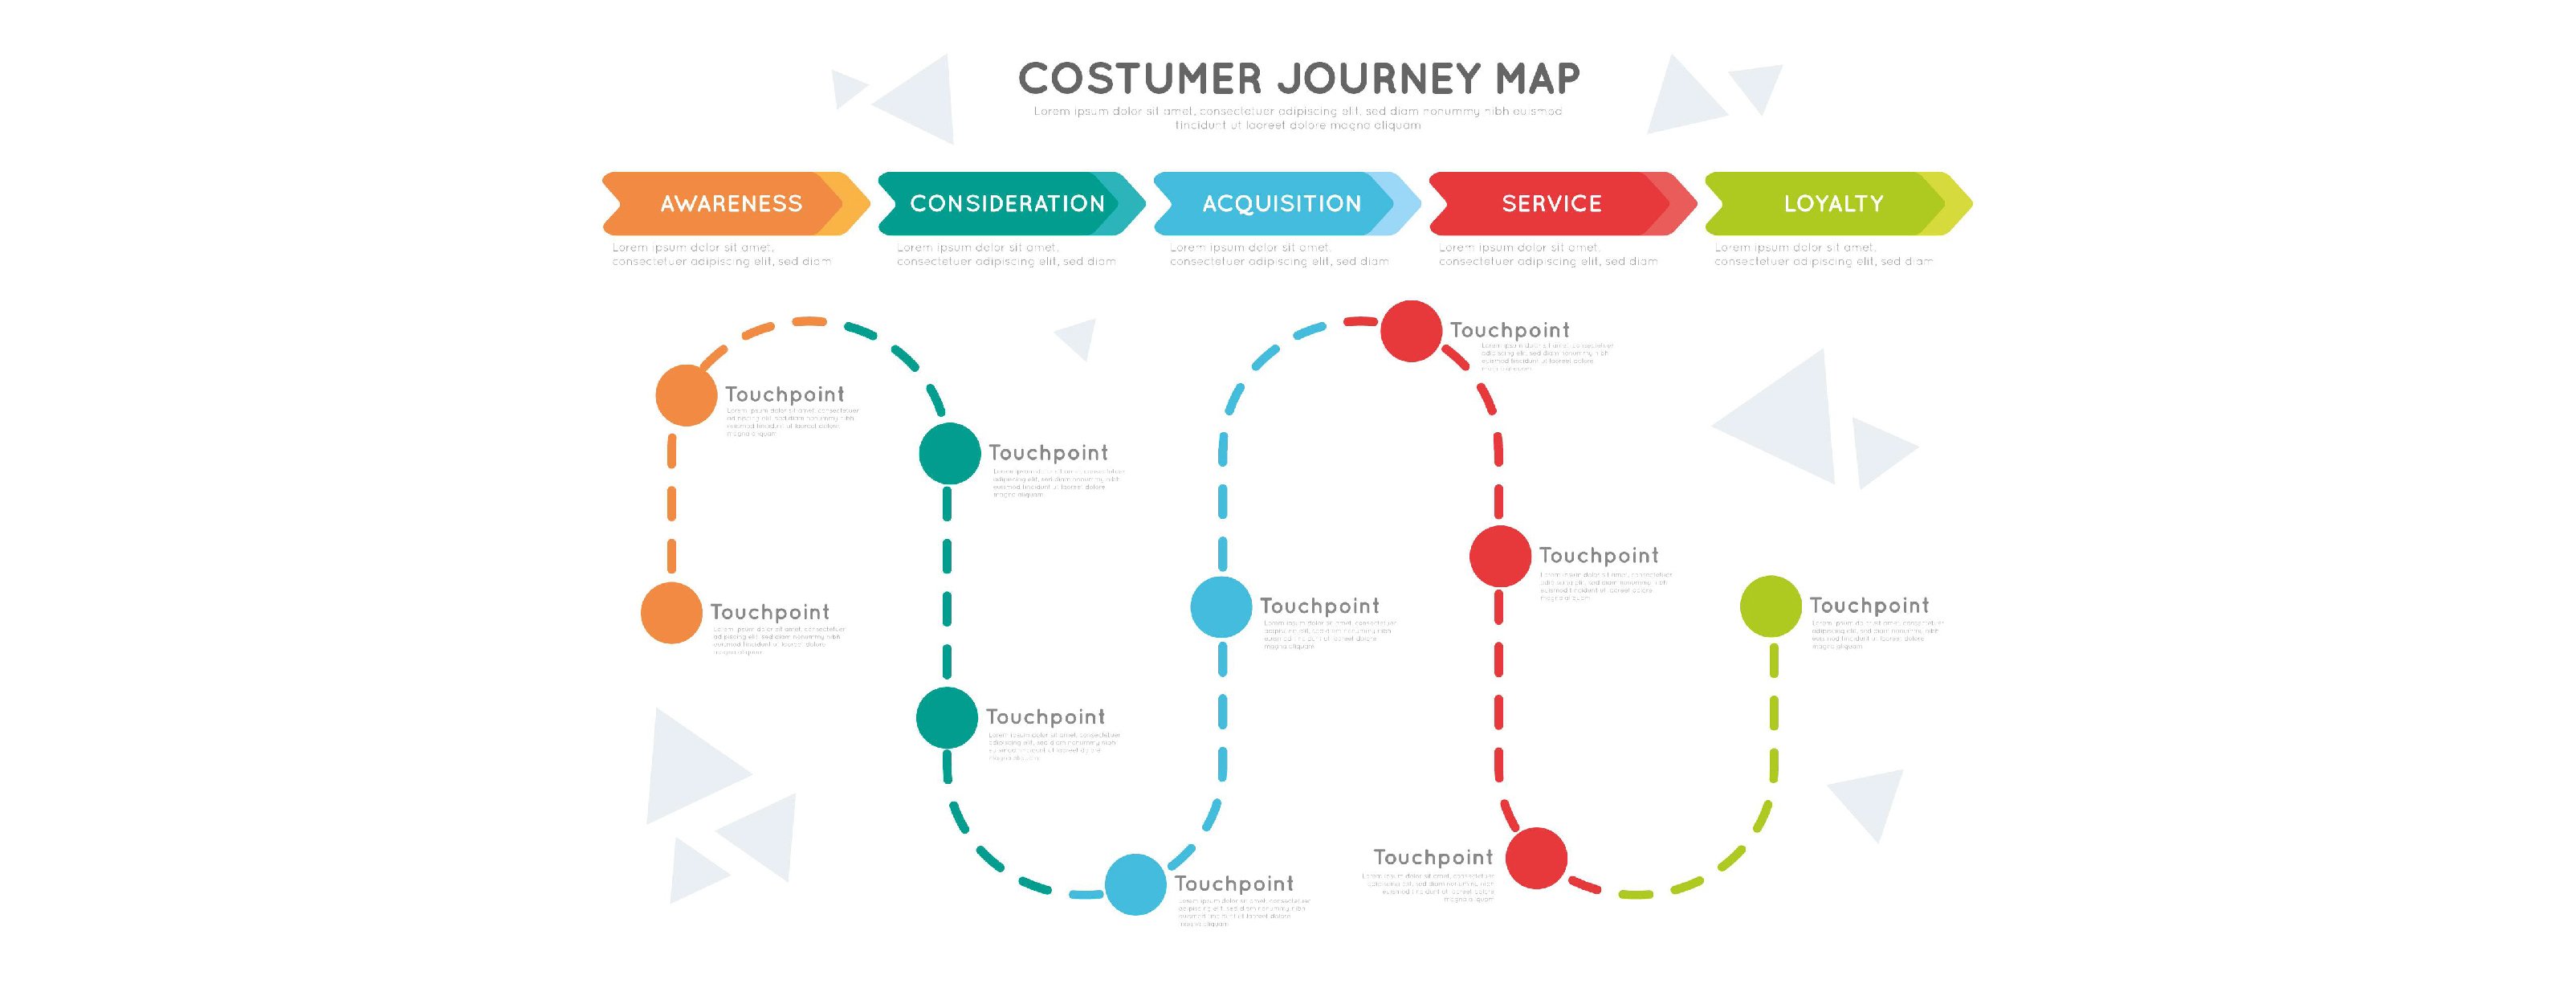 journey-map-clientes-empresas-ventas